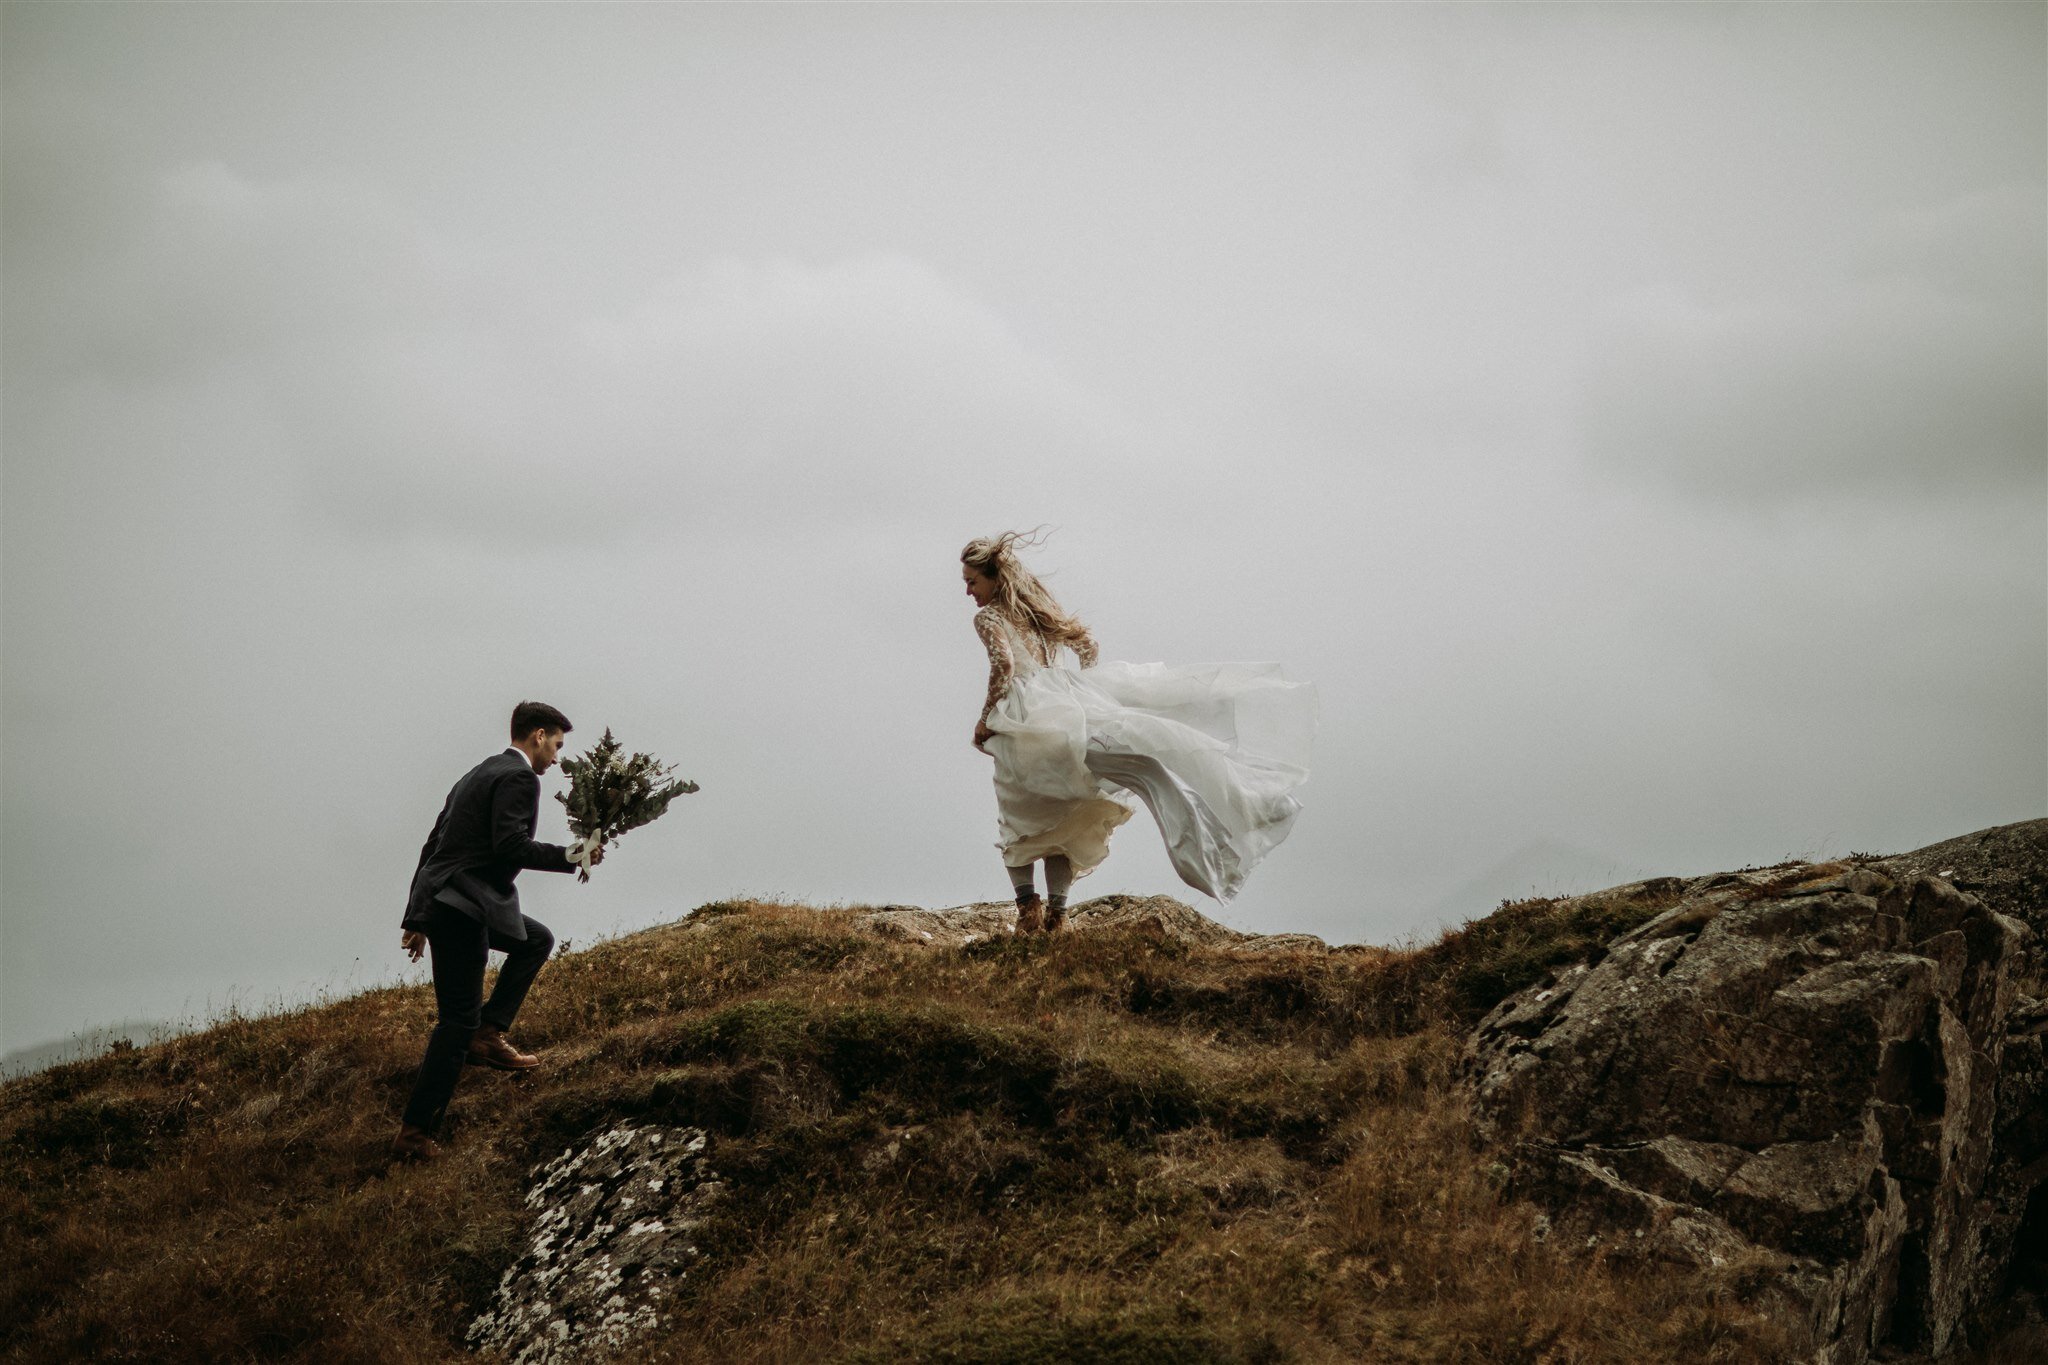 Isle of Skye Scotland elopement photos | Scotland elopement photographer | zakas photo